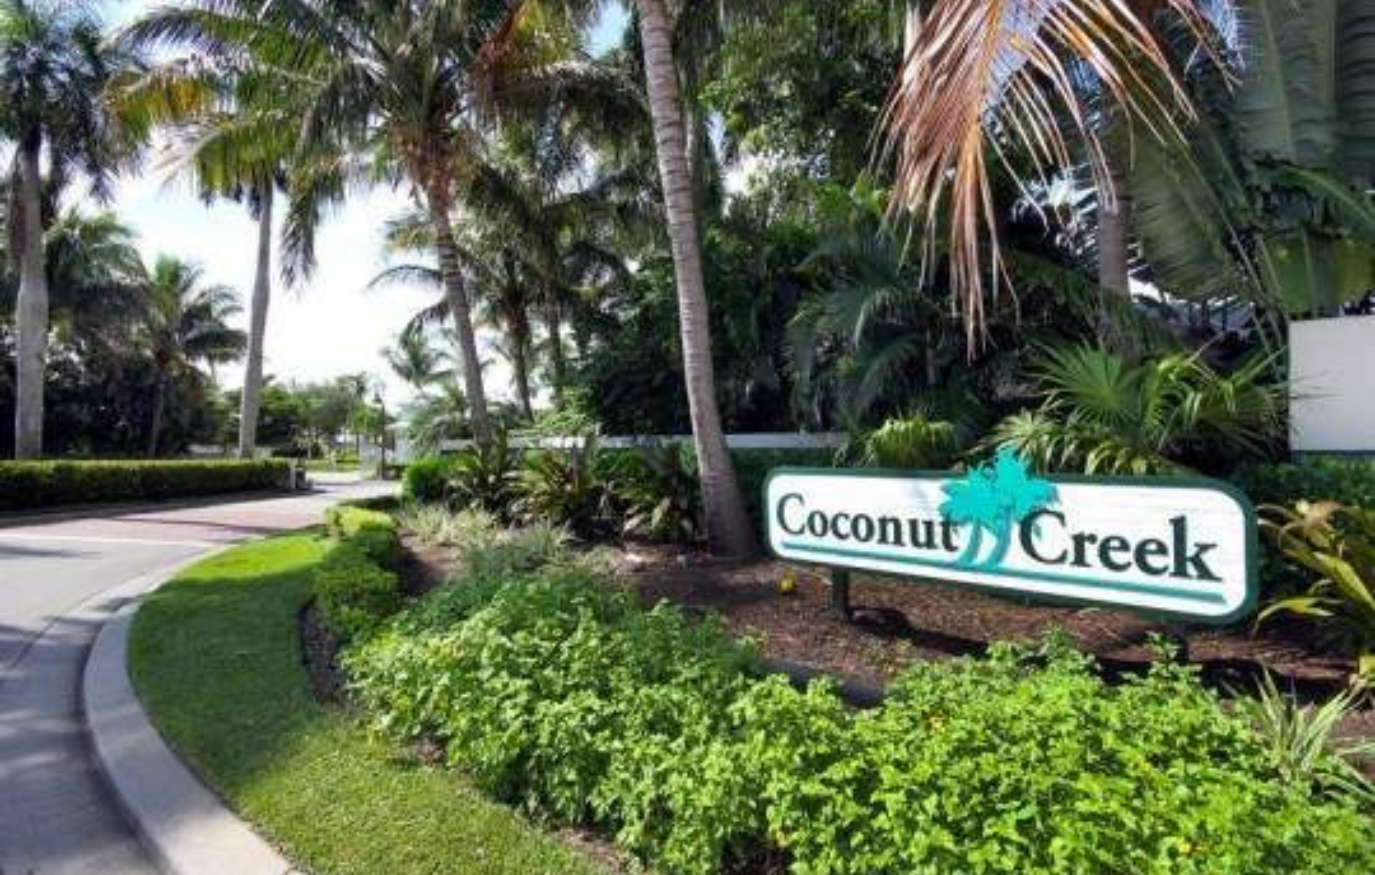 Coconut Creek